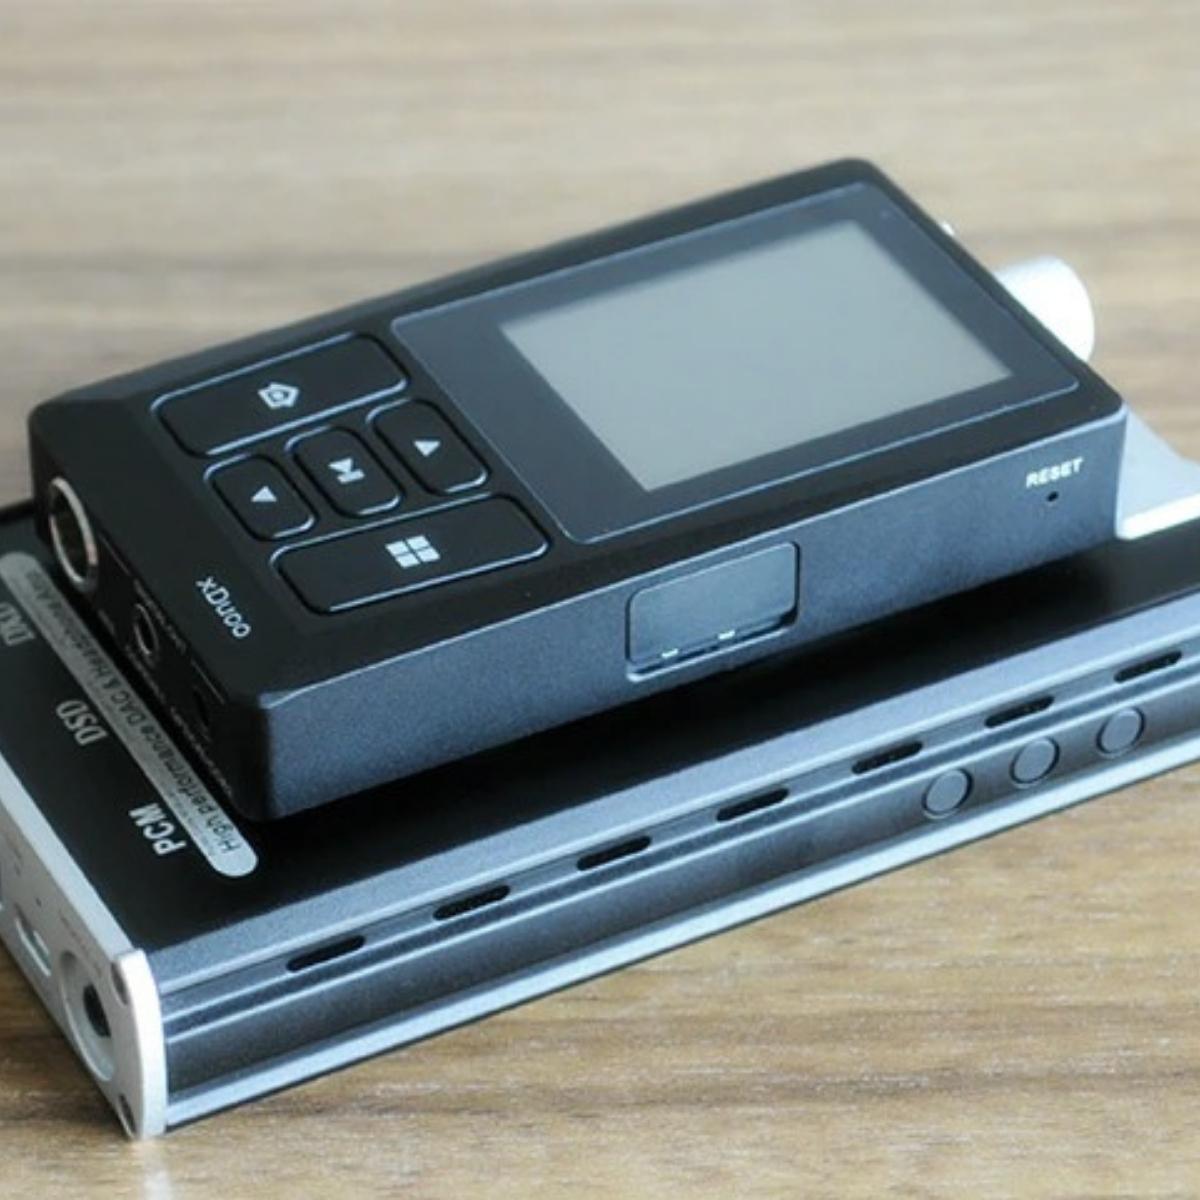 xDuoo X-SK1 High-tech Nano Magic sticker for MP3 Player Amp Phone Bundle